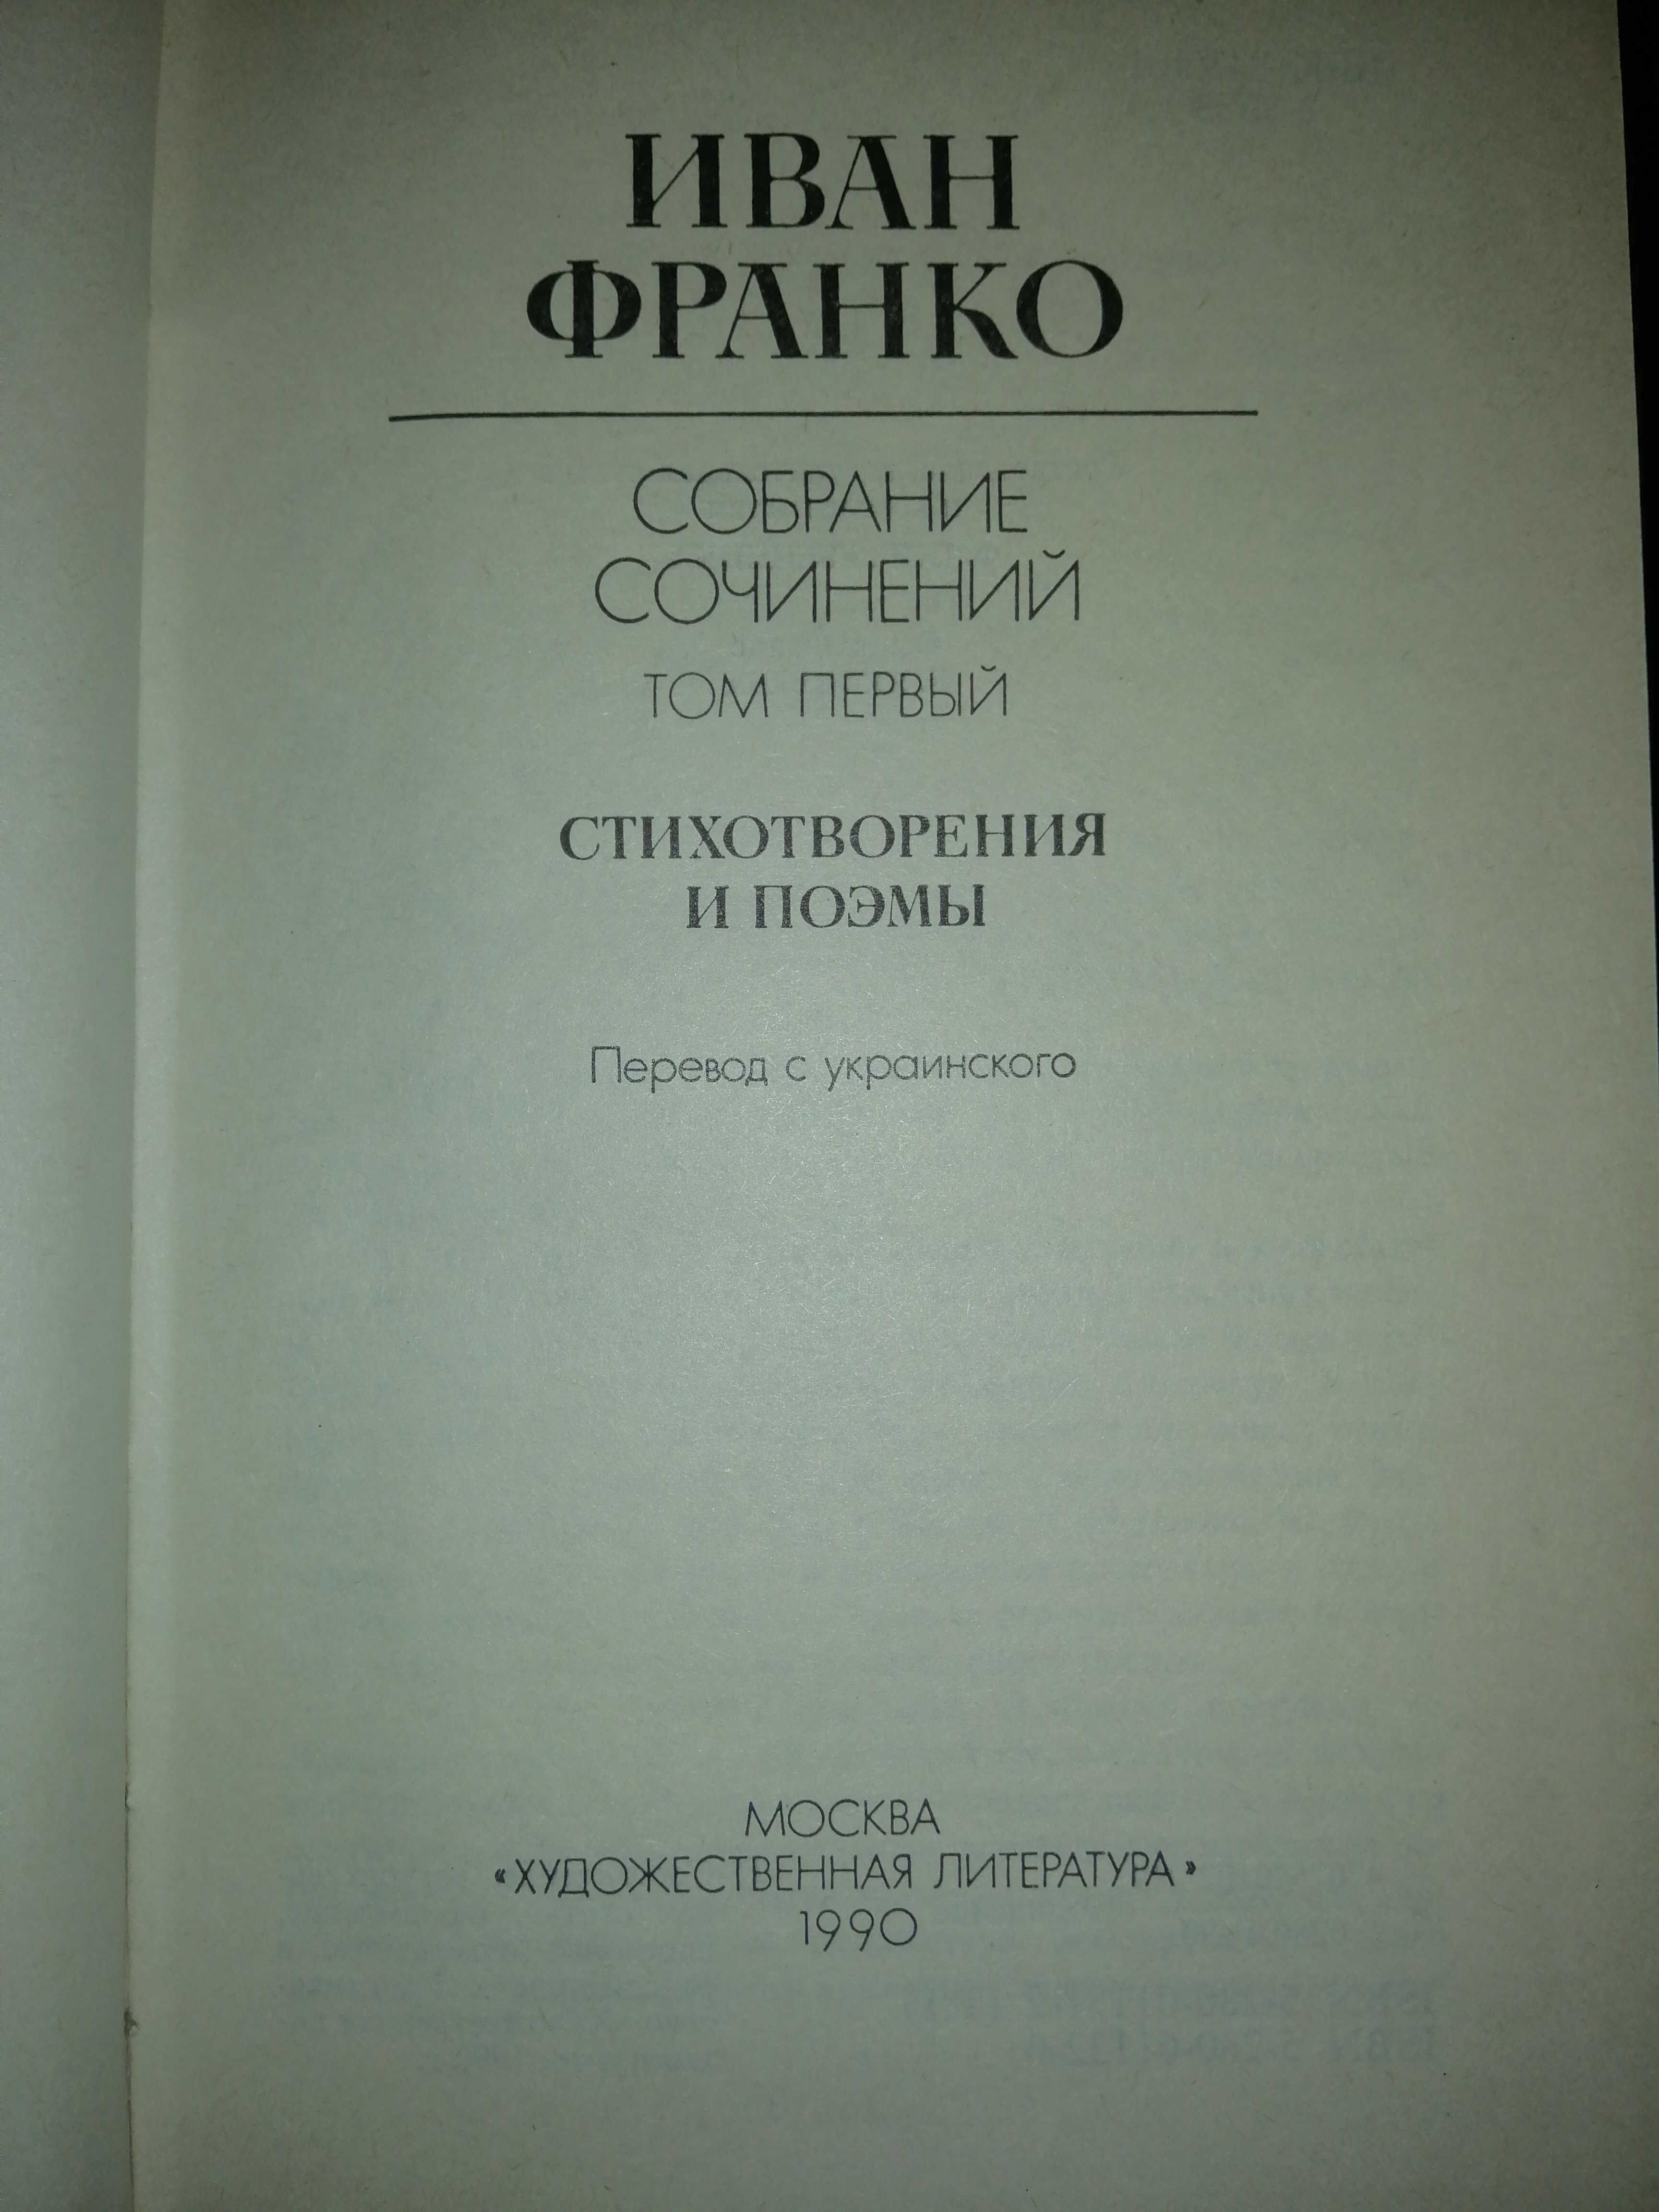 Иван Франко в 3 томах